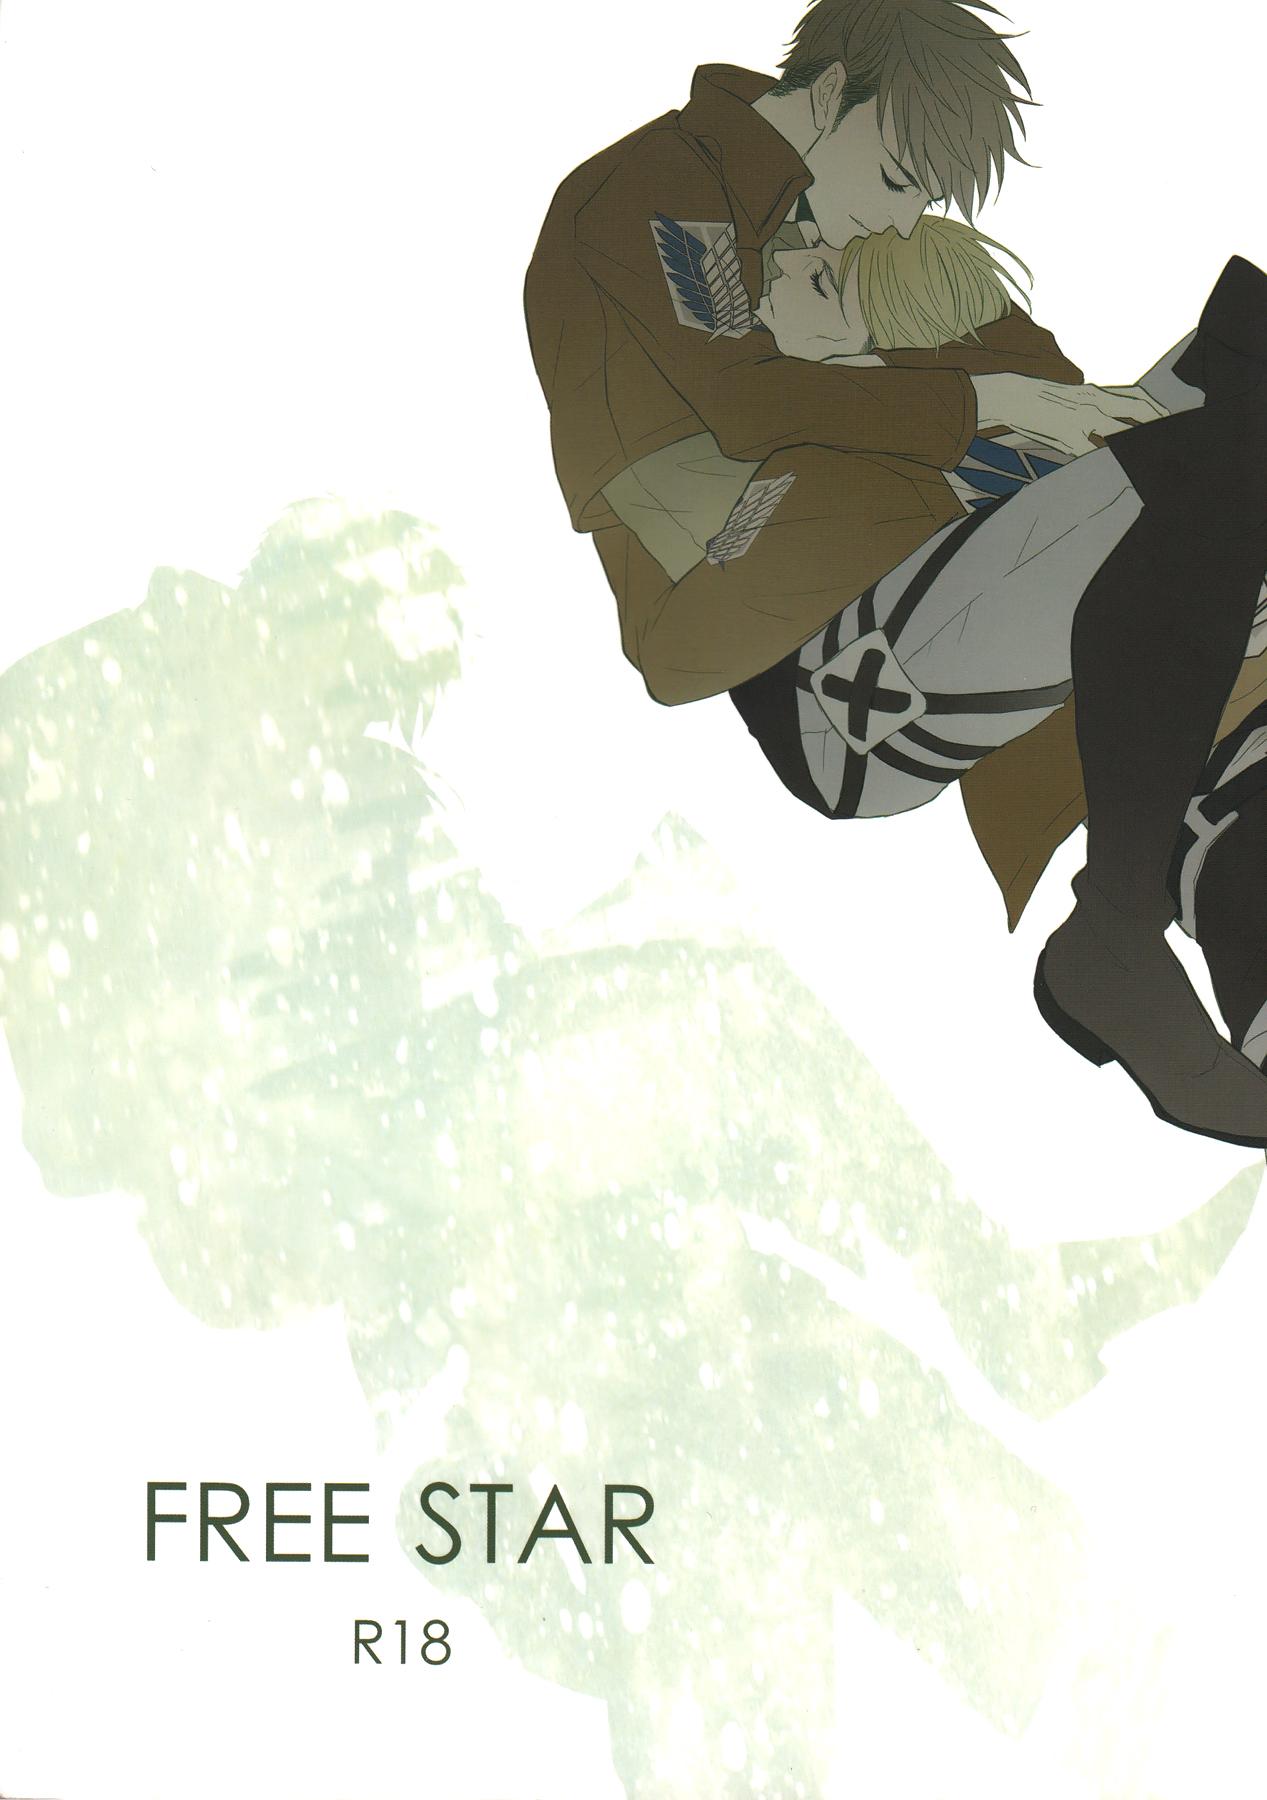 FREE STAR 0